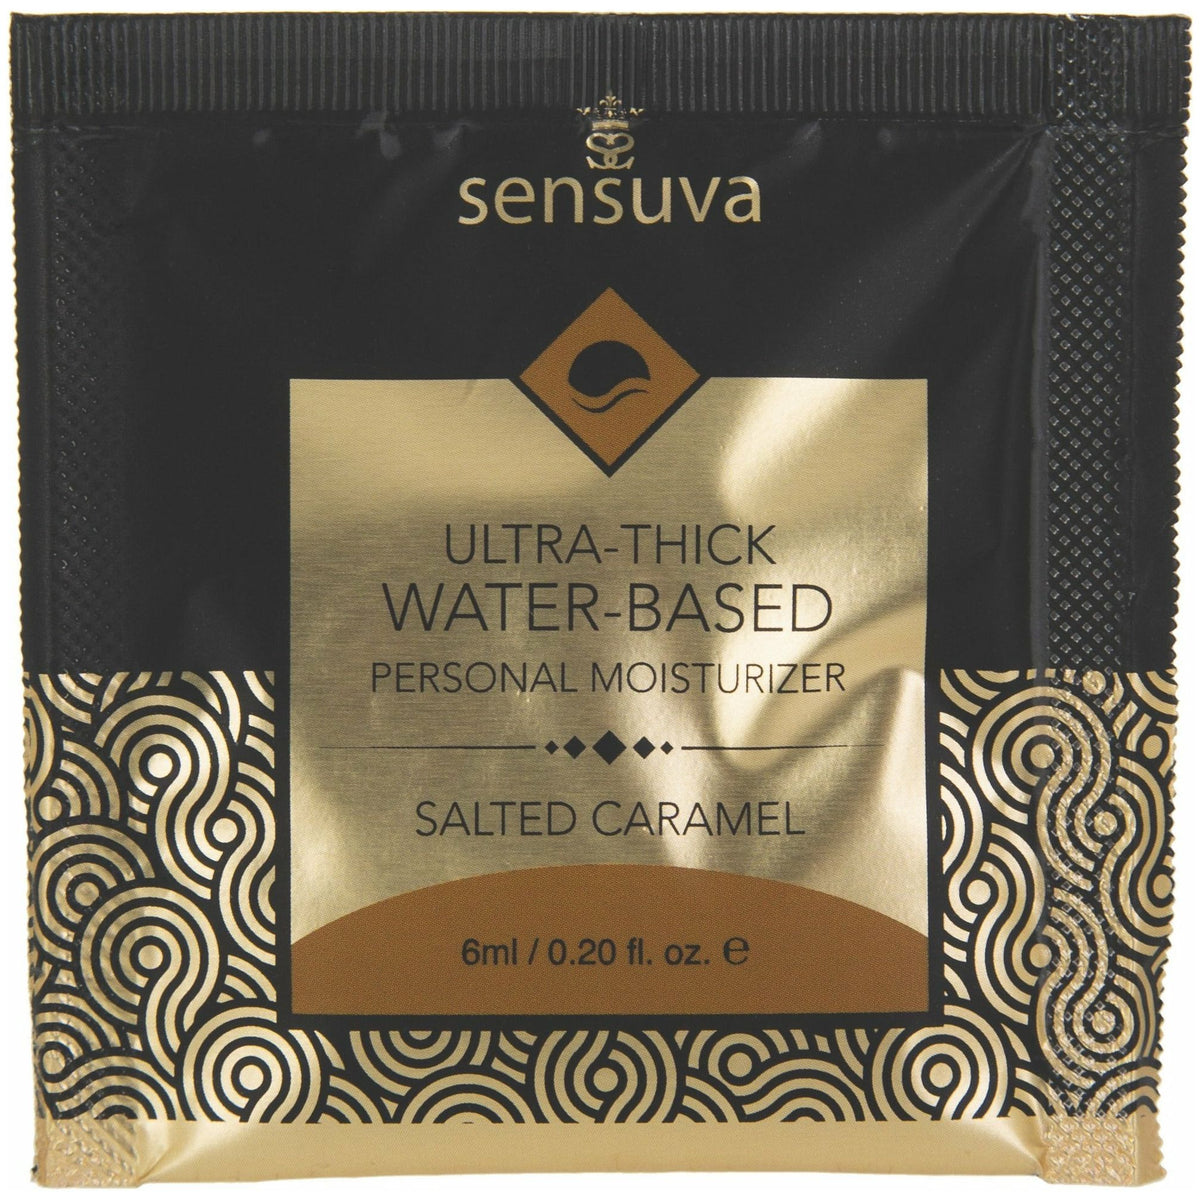 Sensuva Ultra-Thick Water-Based Formula – Personal Moisturizer – Salted Caramel - 6ml/0.20 oz